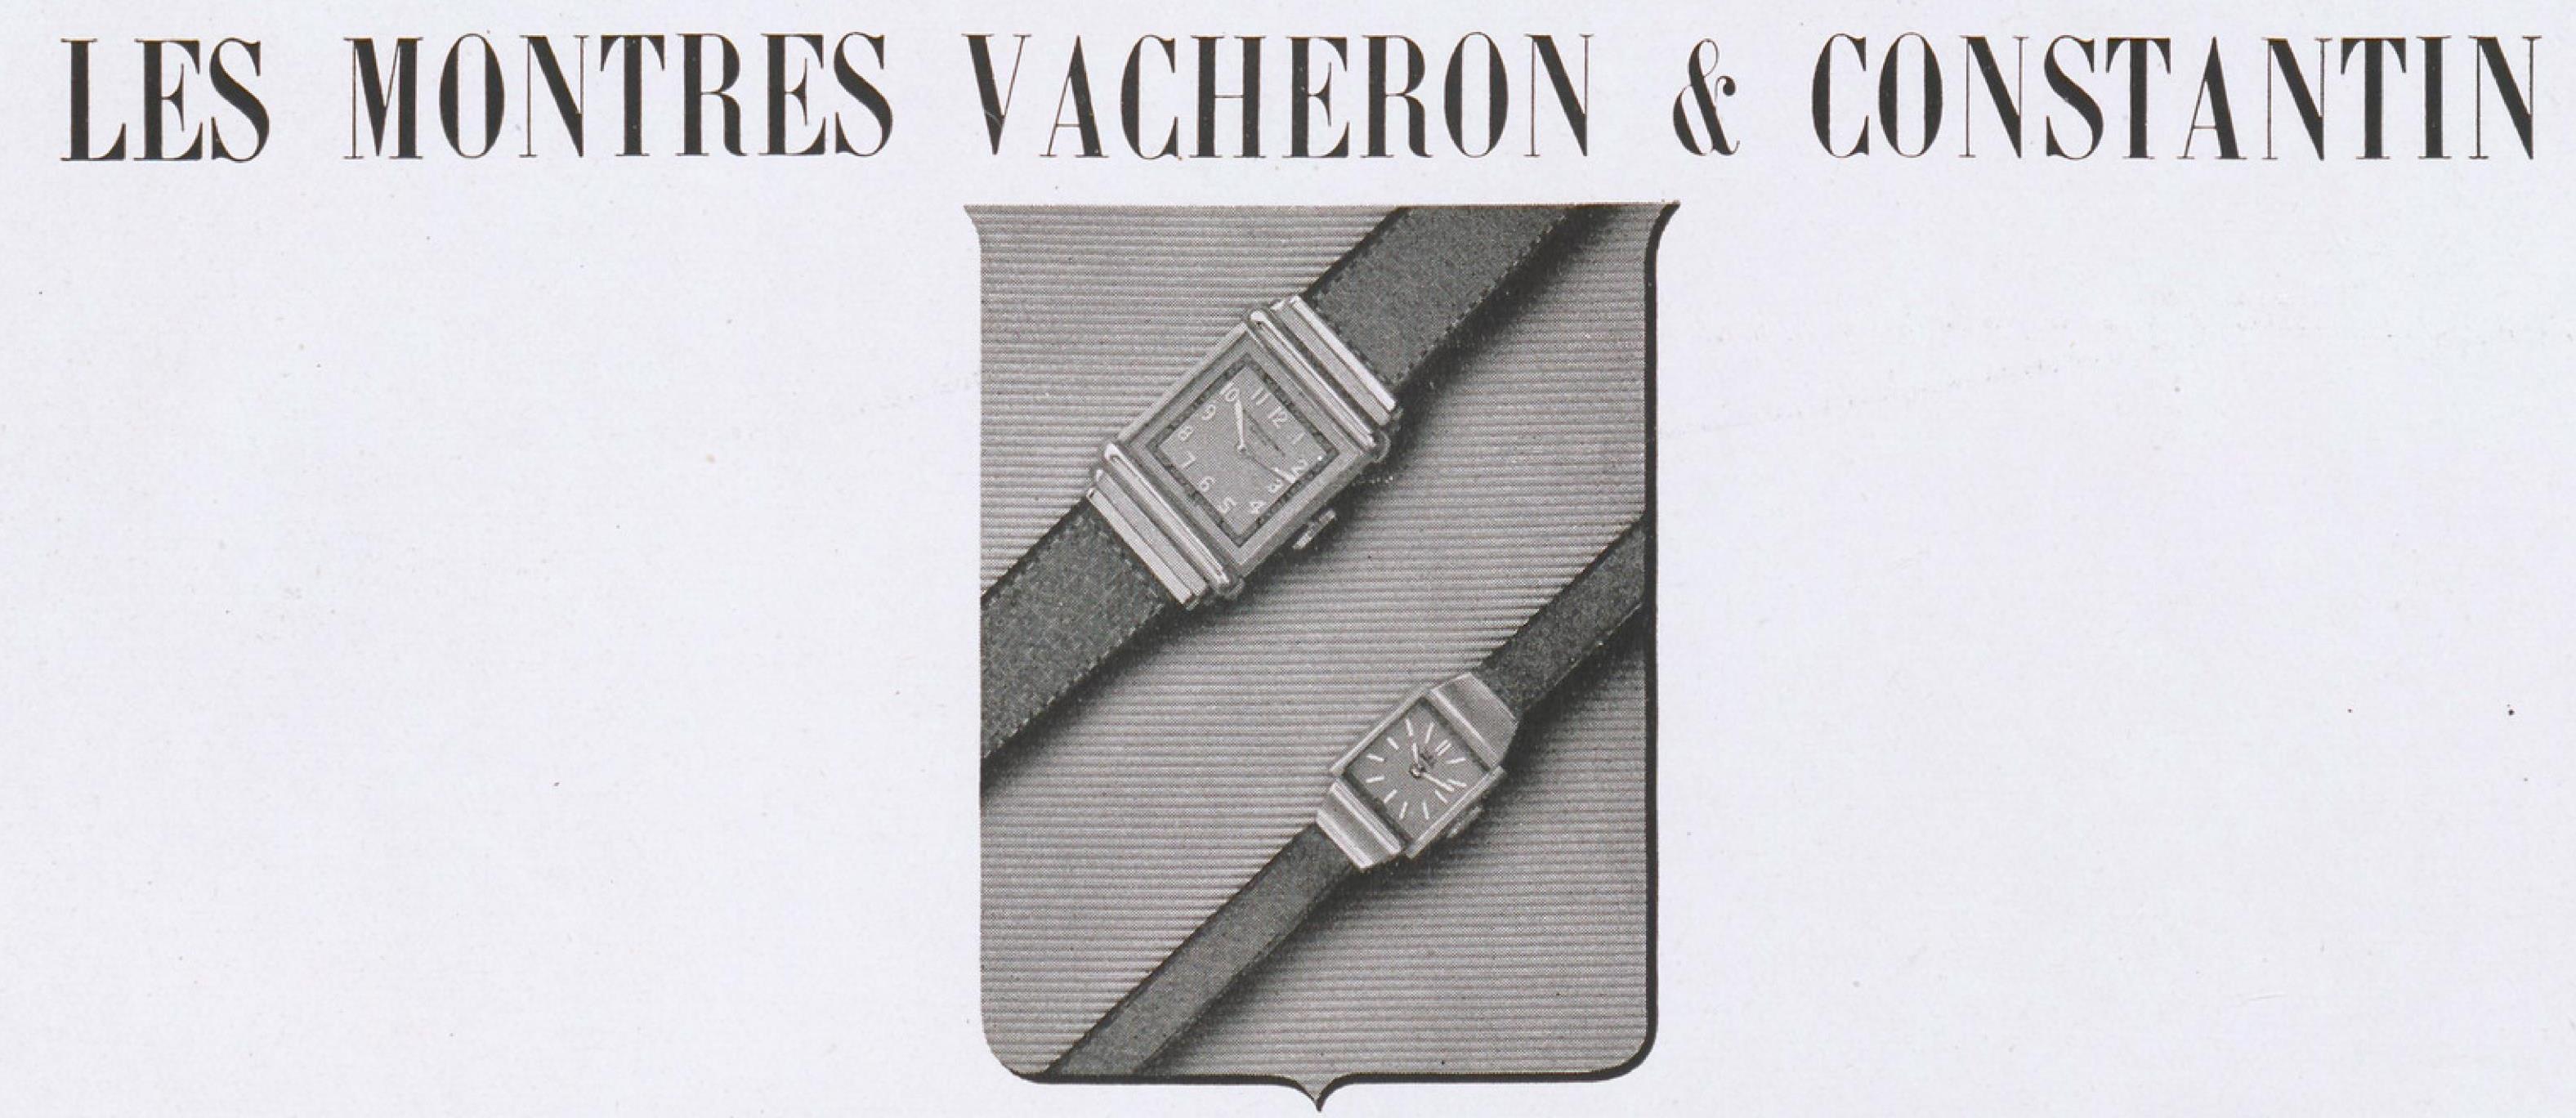 Vacheron & Constantin 1939 16.jpg